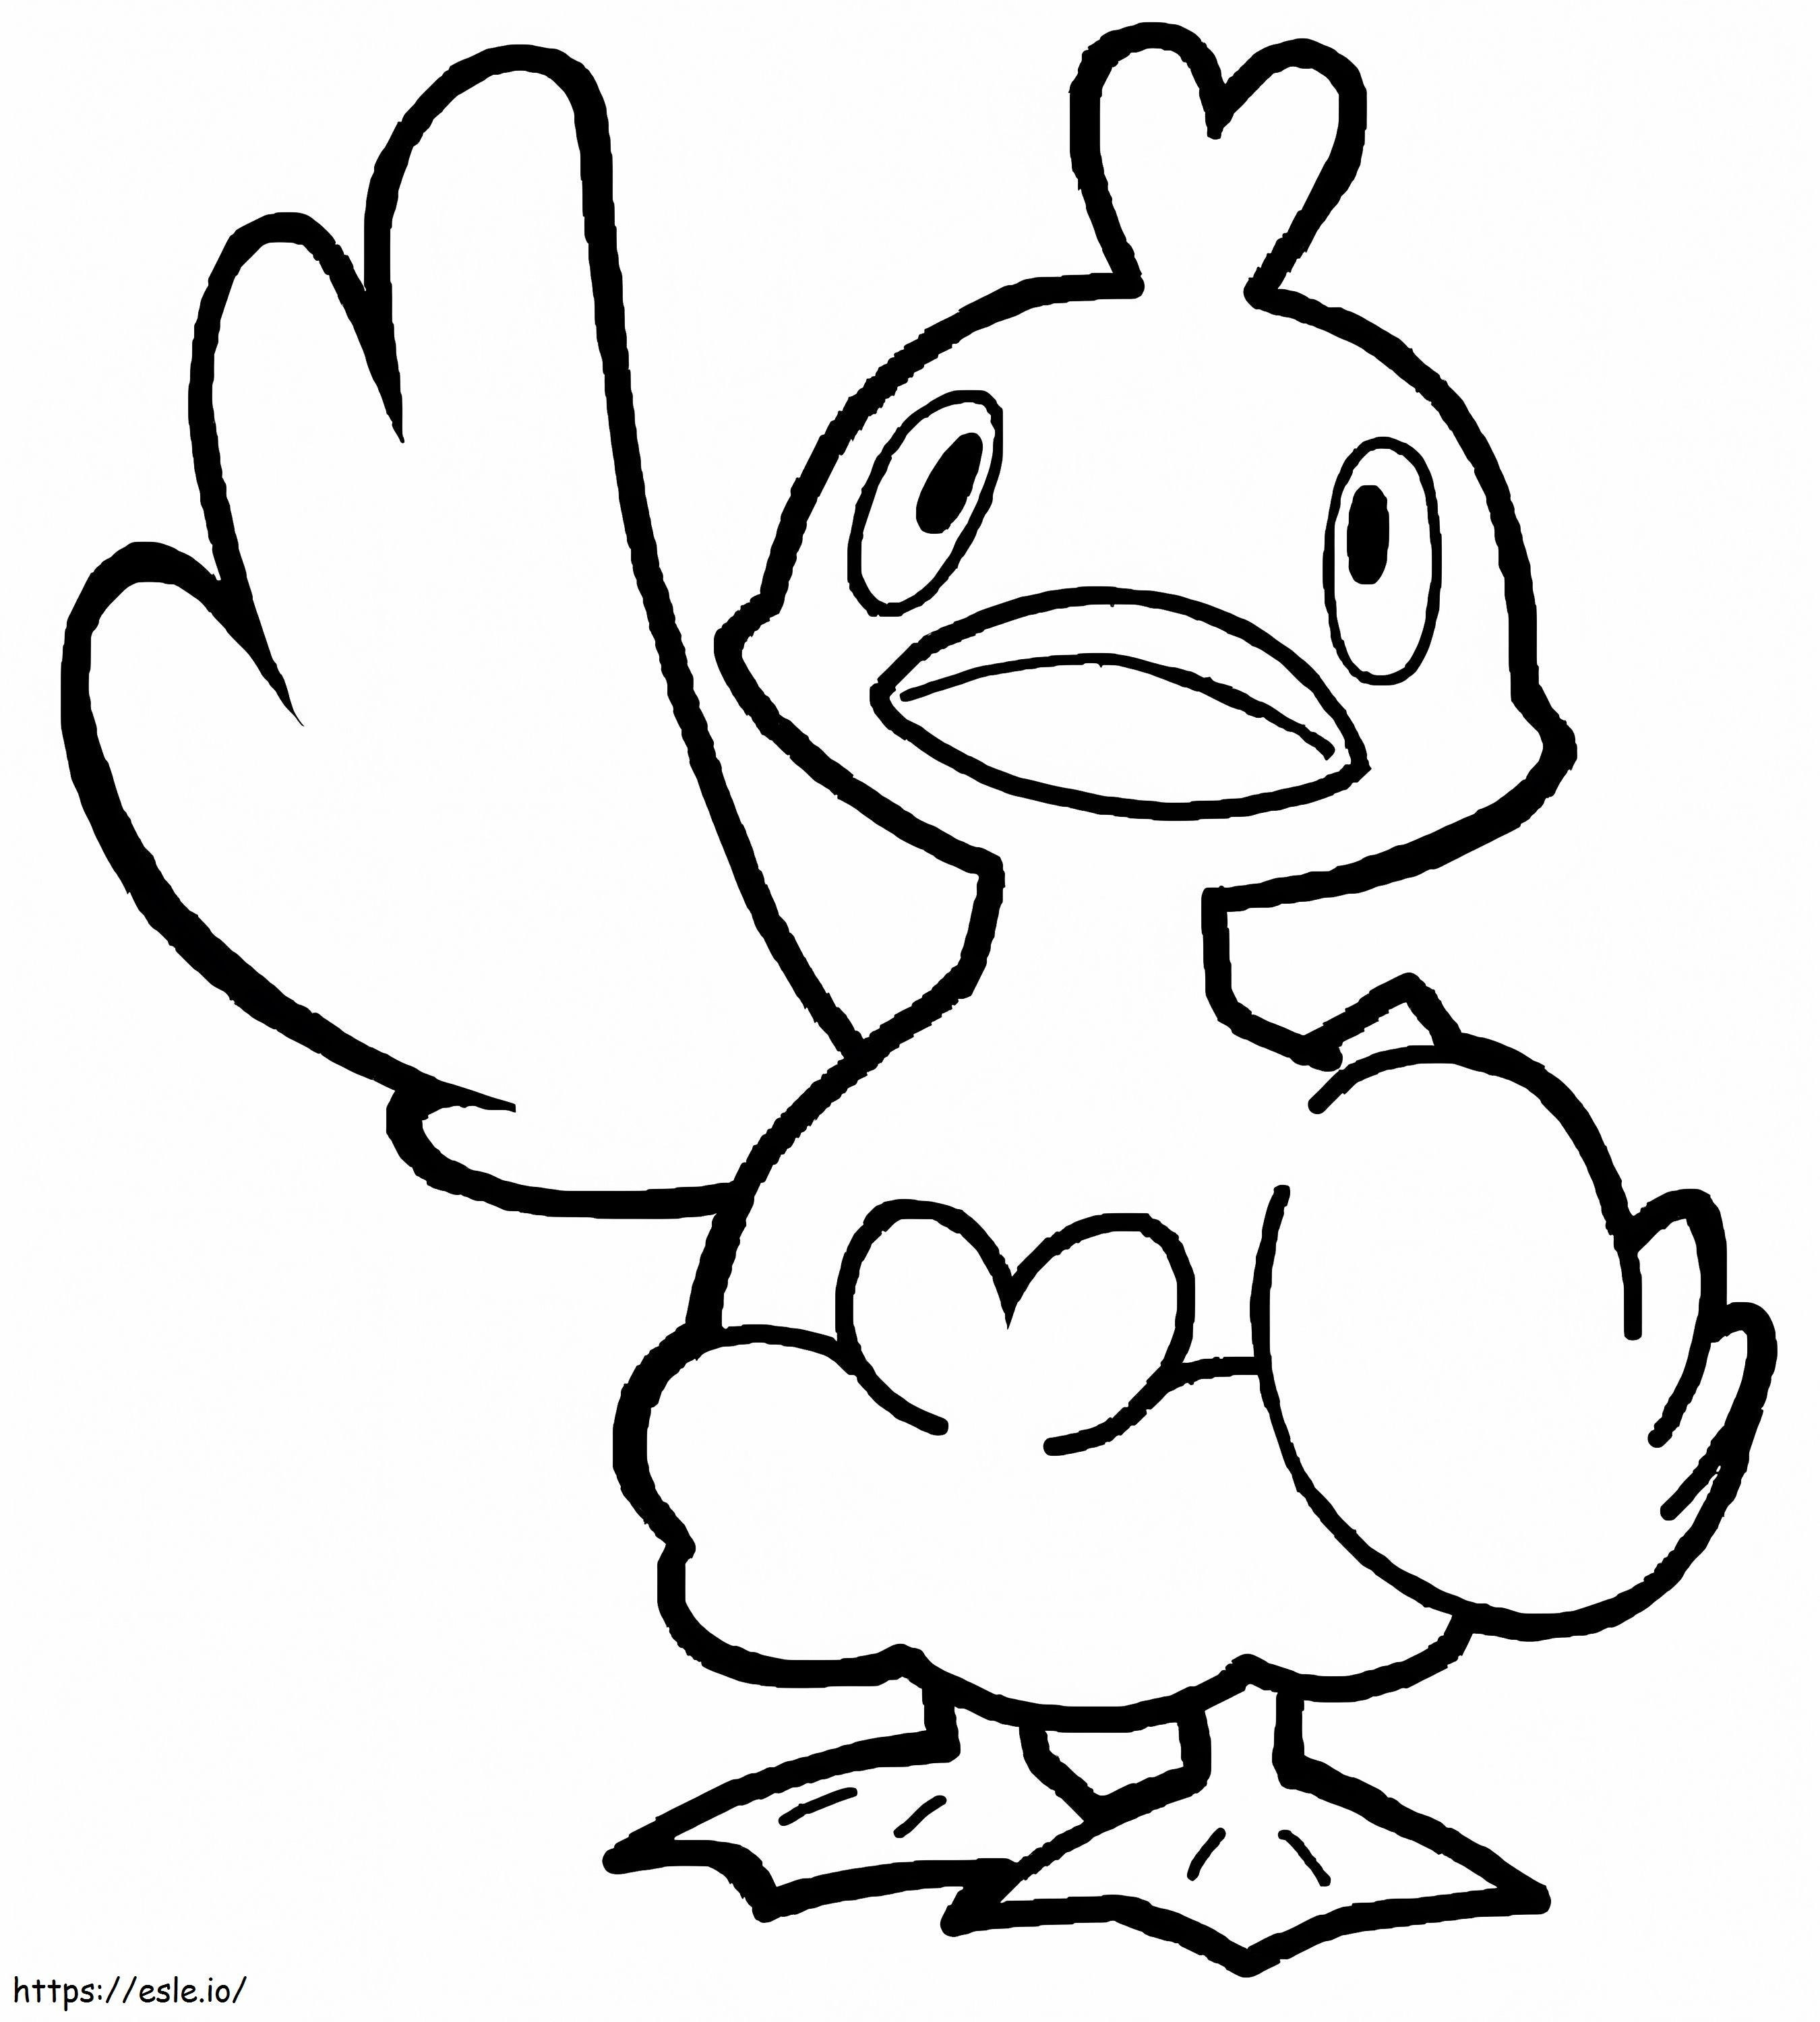 Ducklett-Pokémon ausmalbilder